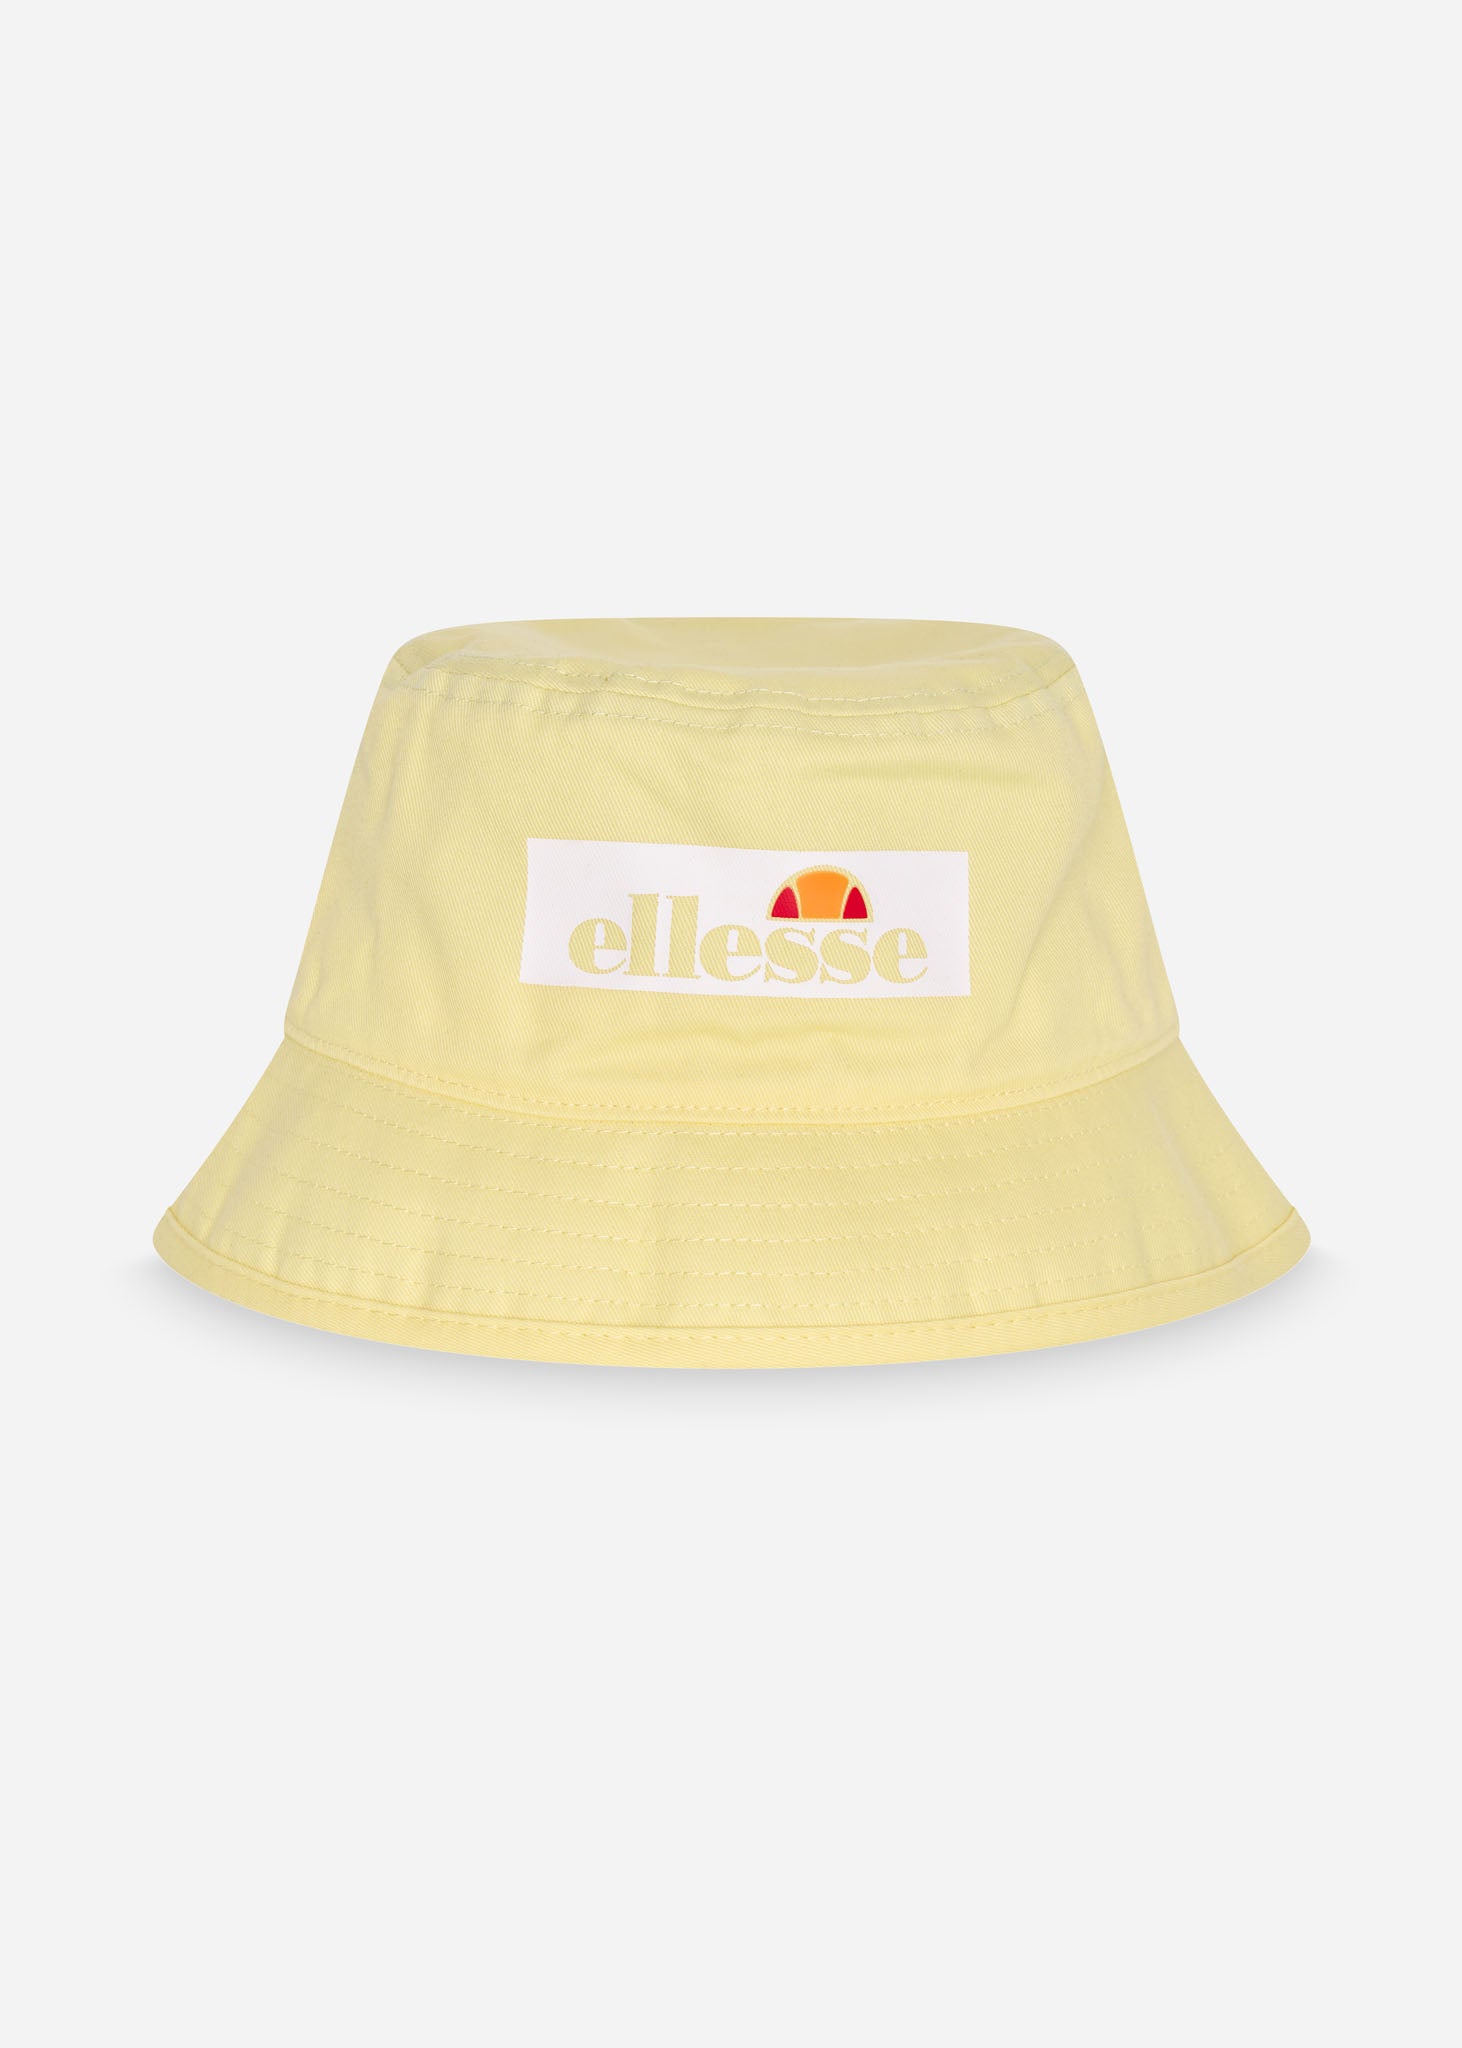 ellesse bucket hat yellow